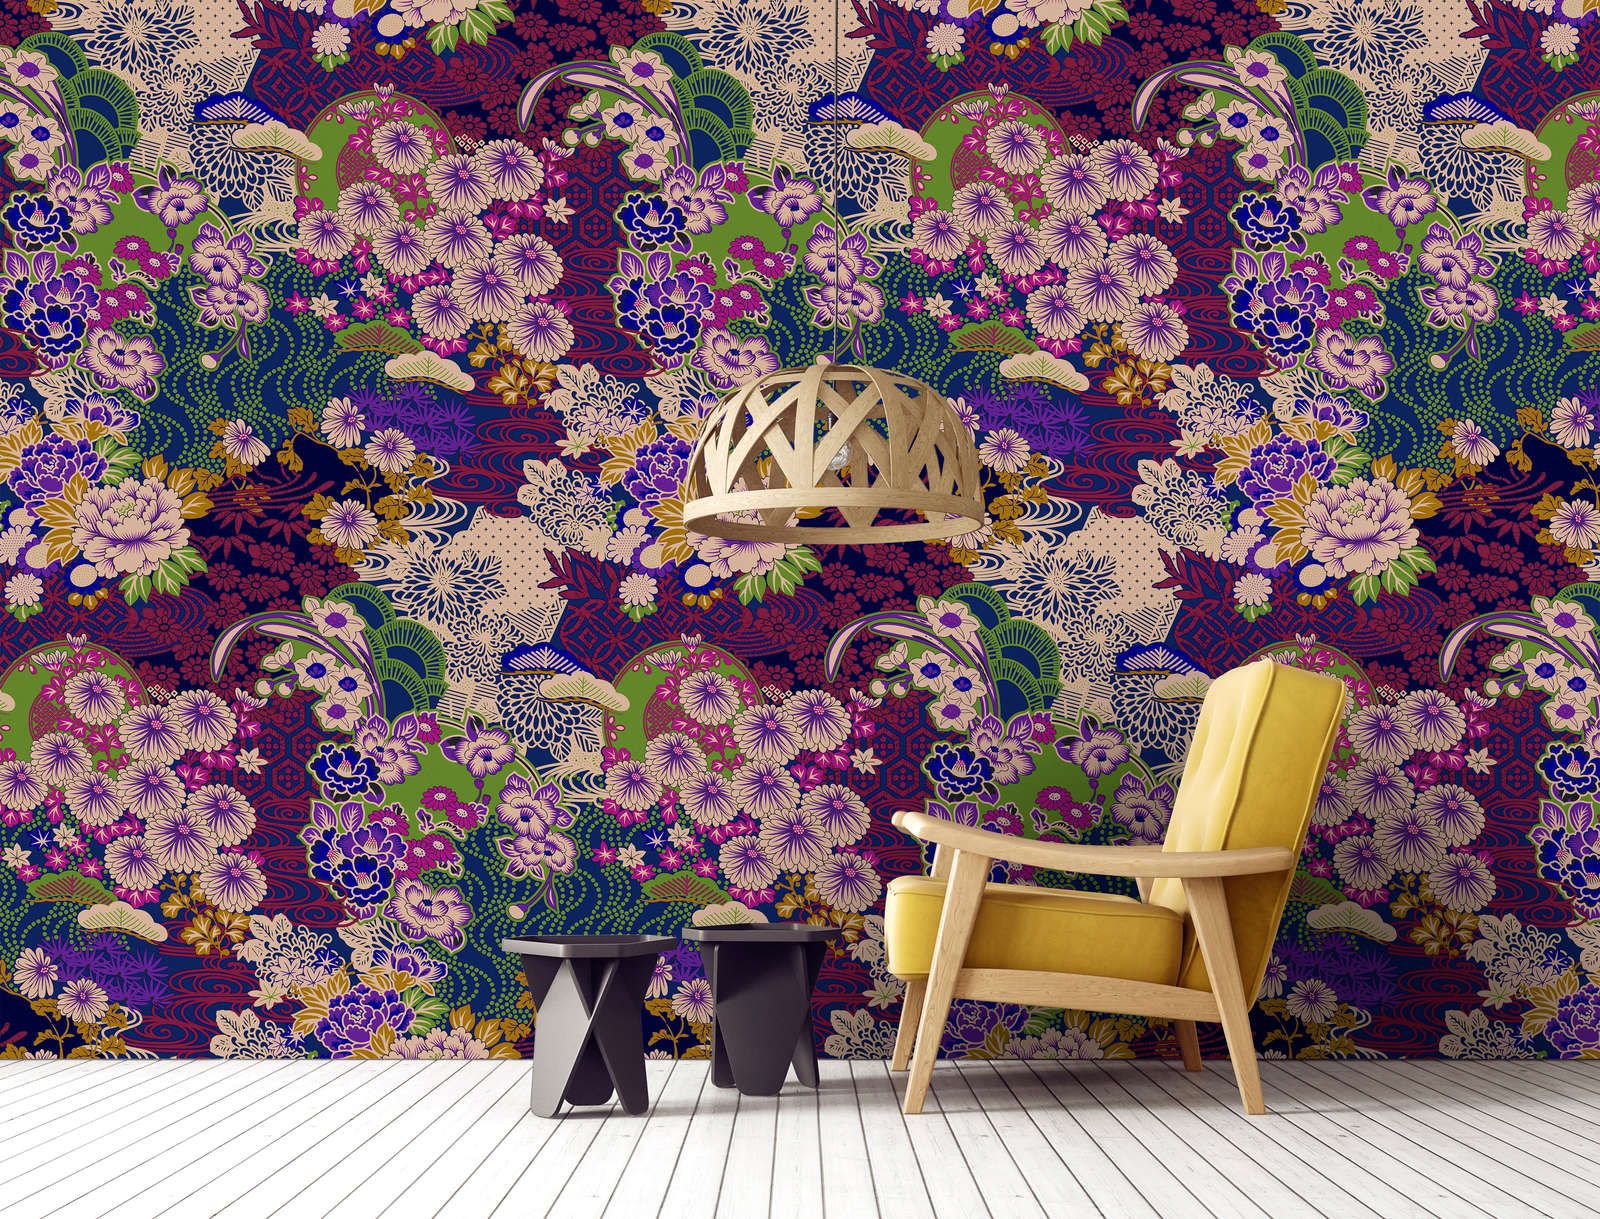             Fotomural »kimo 2« - Obra de arte abstracta flor - Violeta, Verde | Mate, Tela no tejida lisa
        